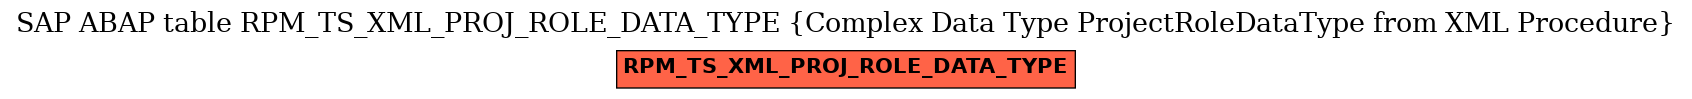 E-R Diagram for table RPM_TS_XML_PROJ_ROLE_DATA_TYPE (Complex Data Type ProjectRoleDataType from XML Procedure)